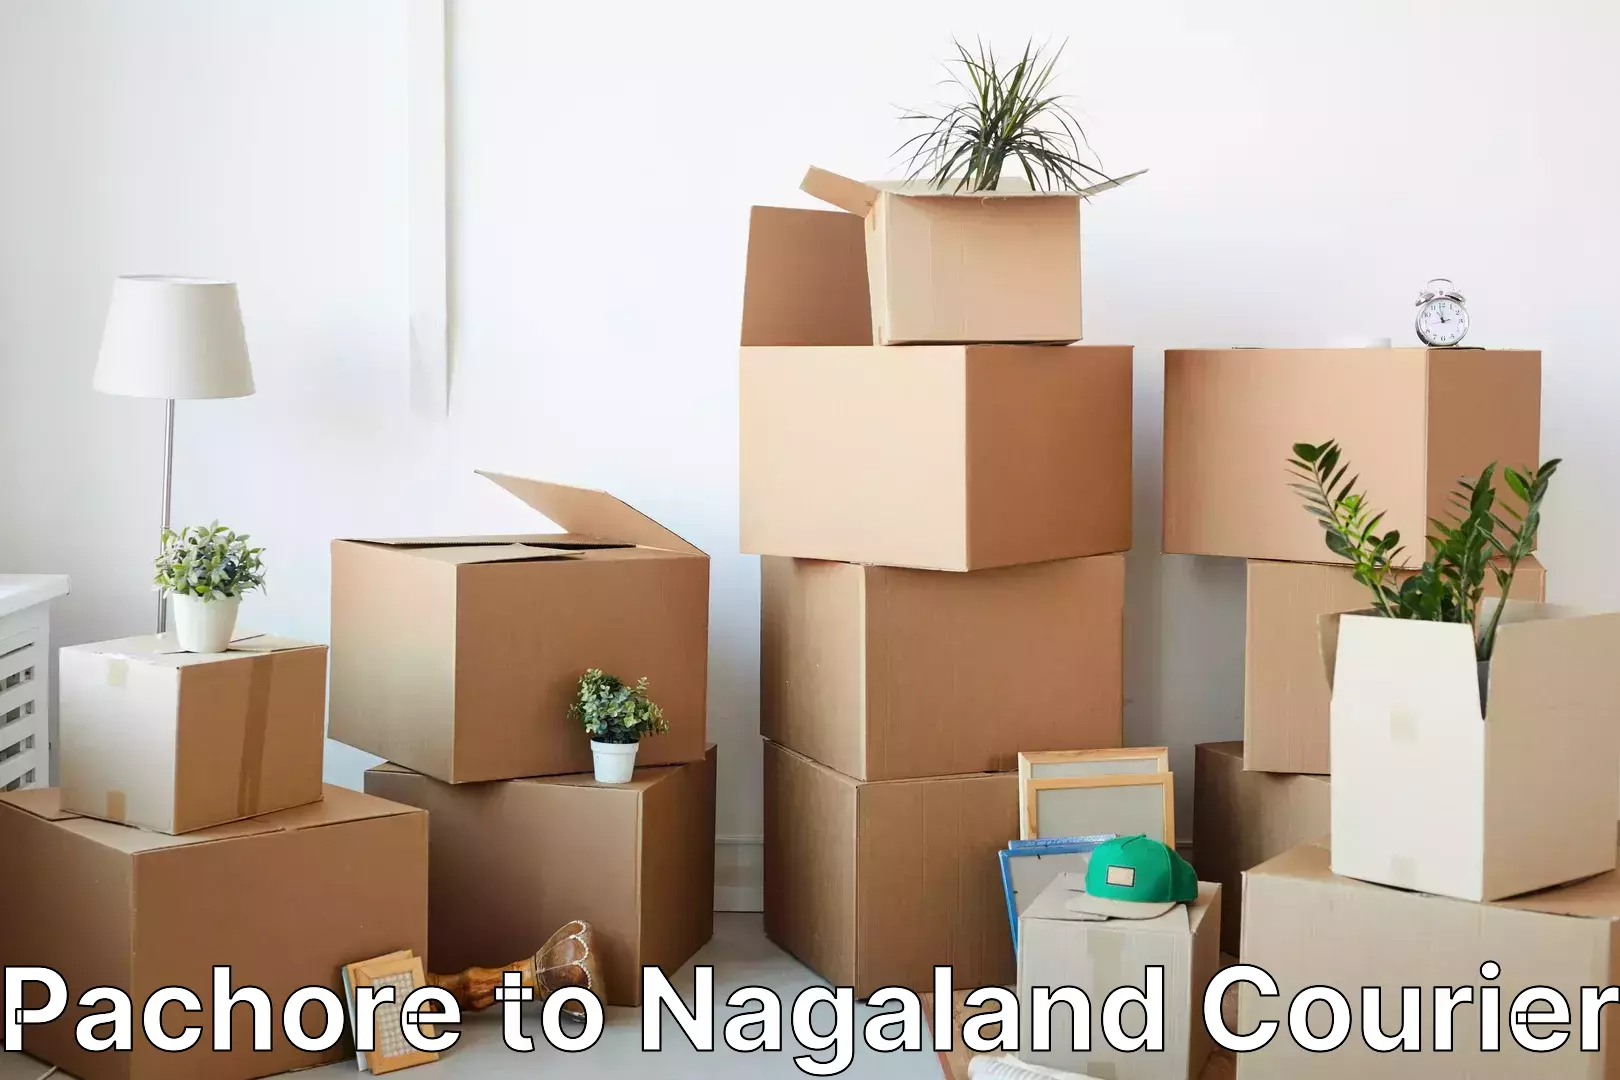 Urban courier service Pachore to Nagaland